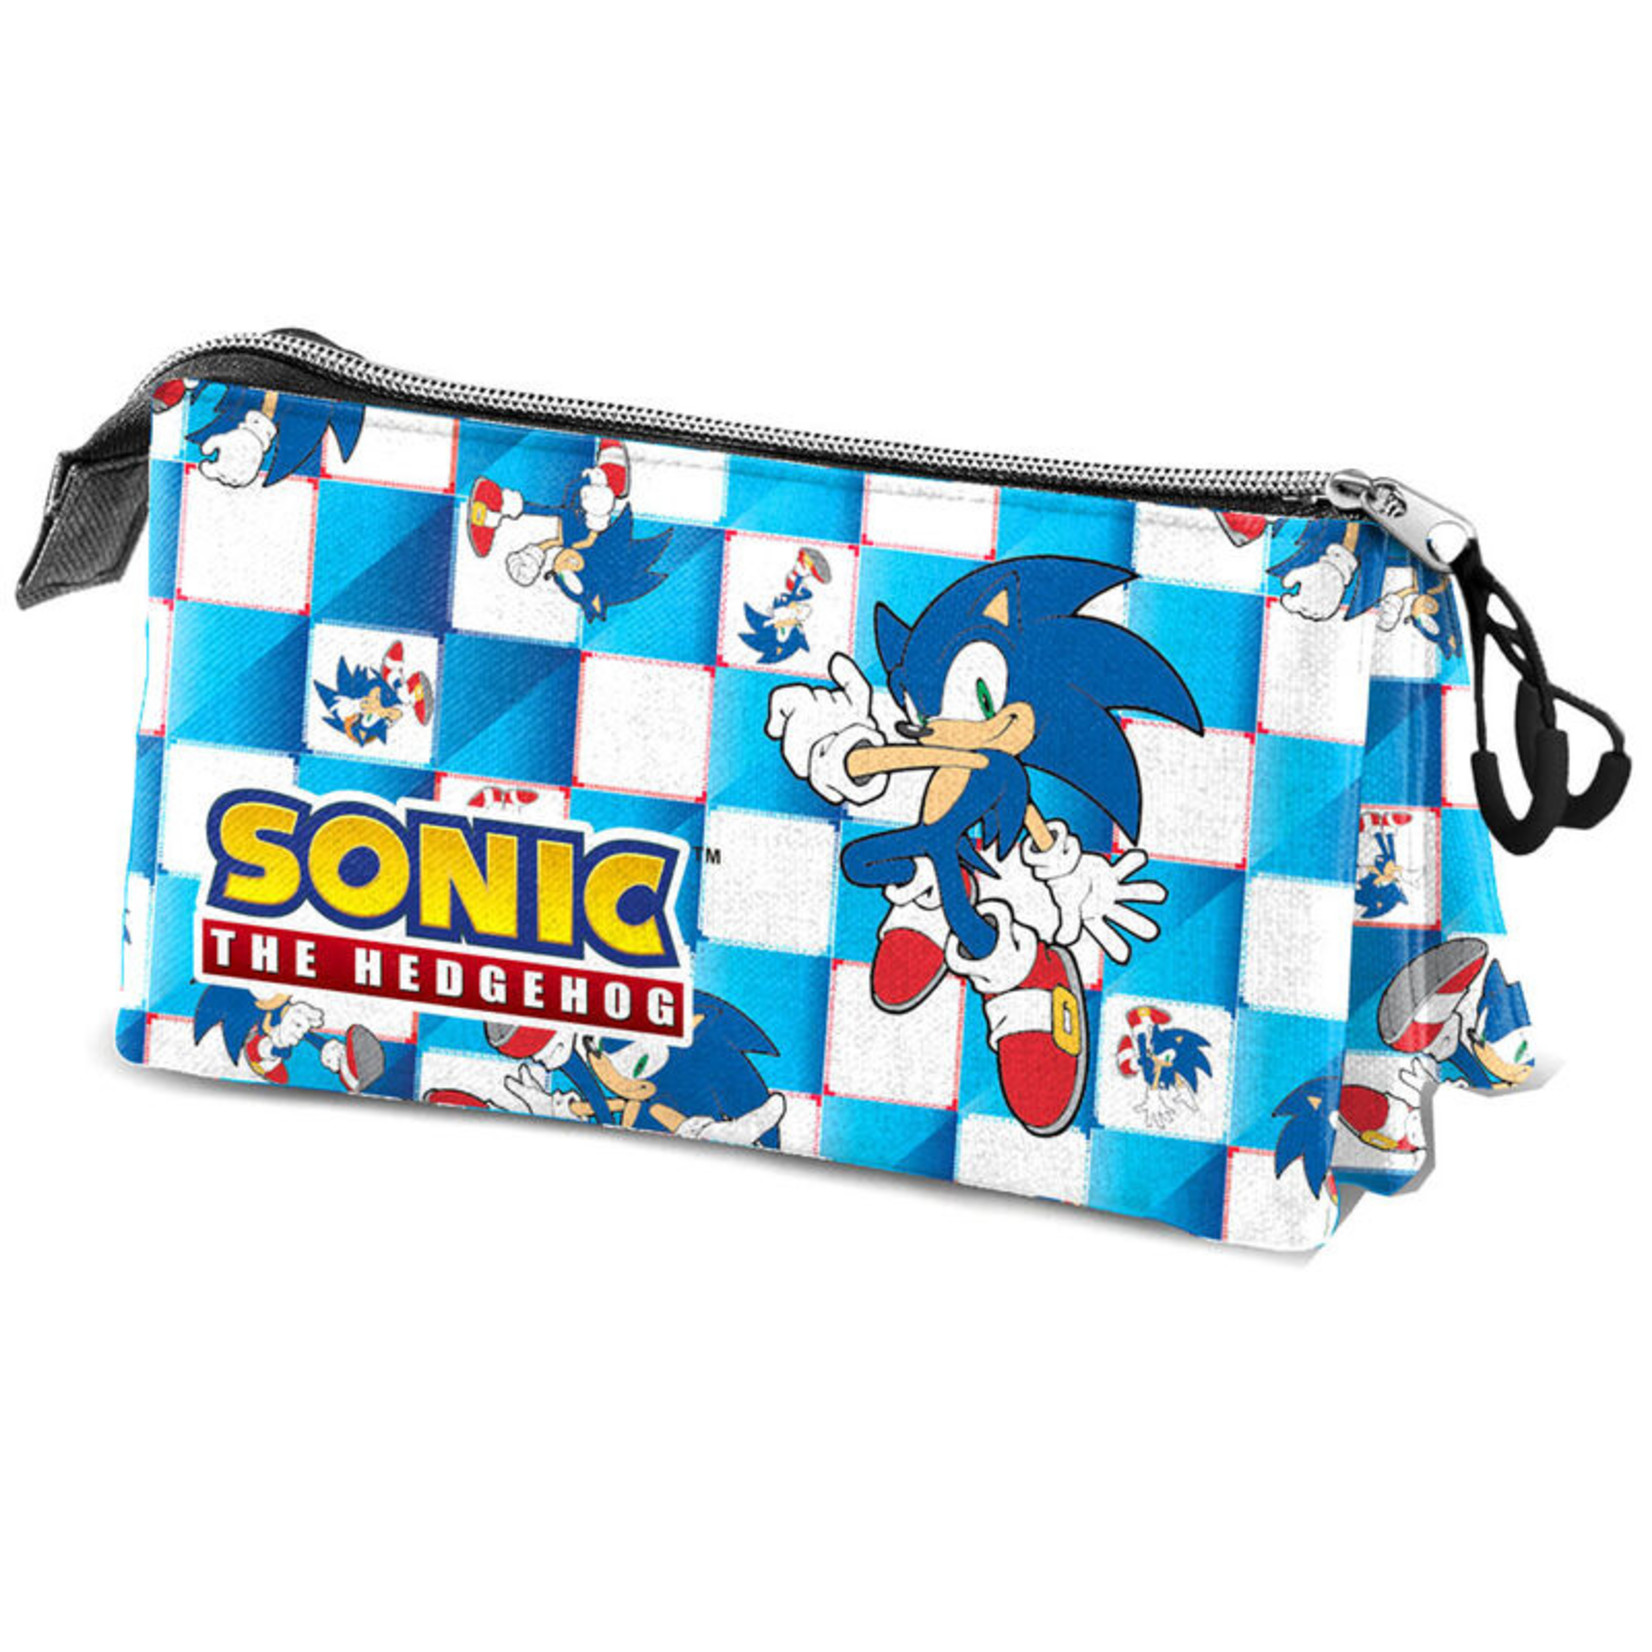 Karacter Mania Karacter Mania Sonic The Hedgehog Blue Lay Triple Pencil Case